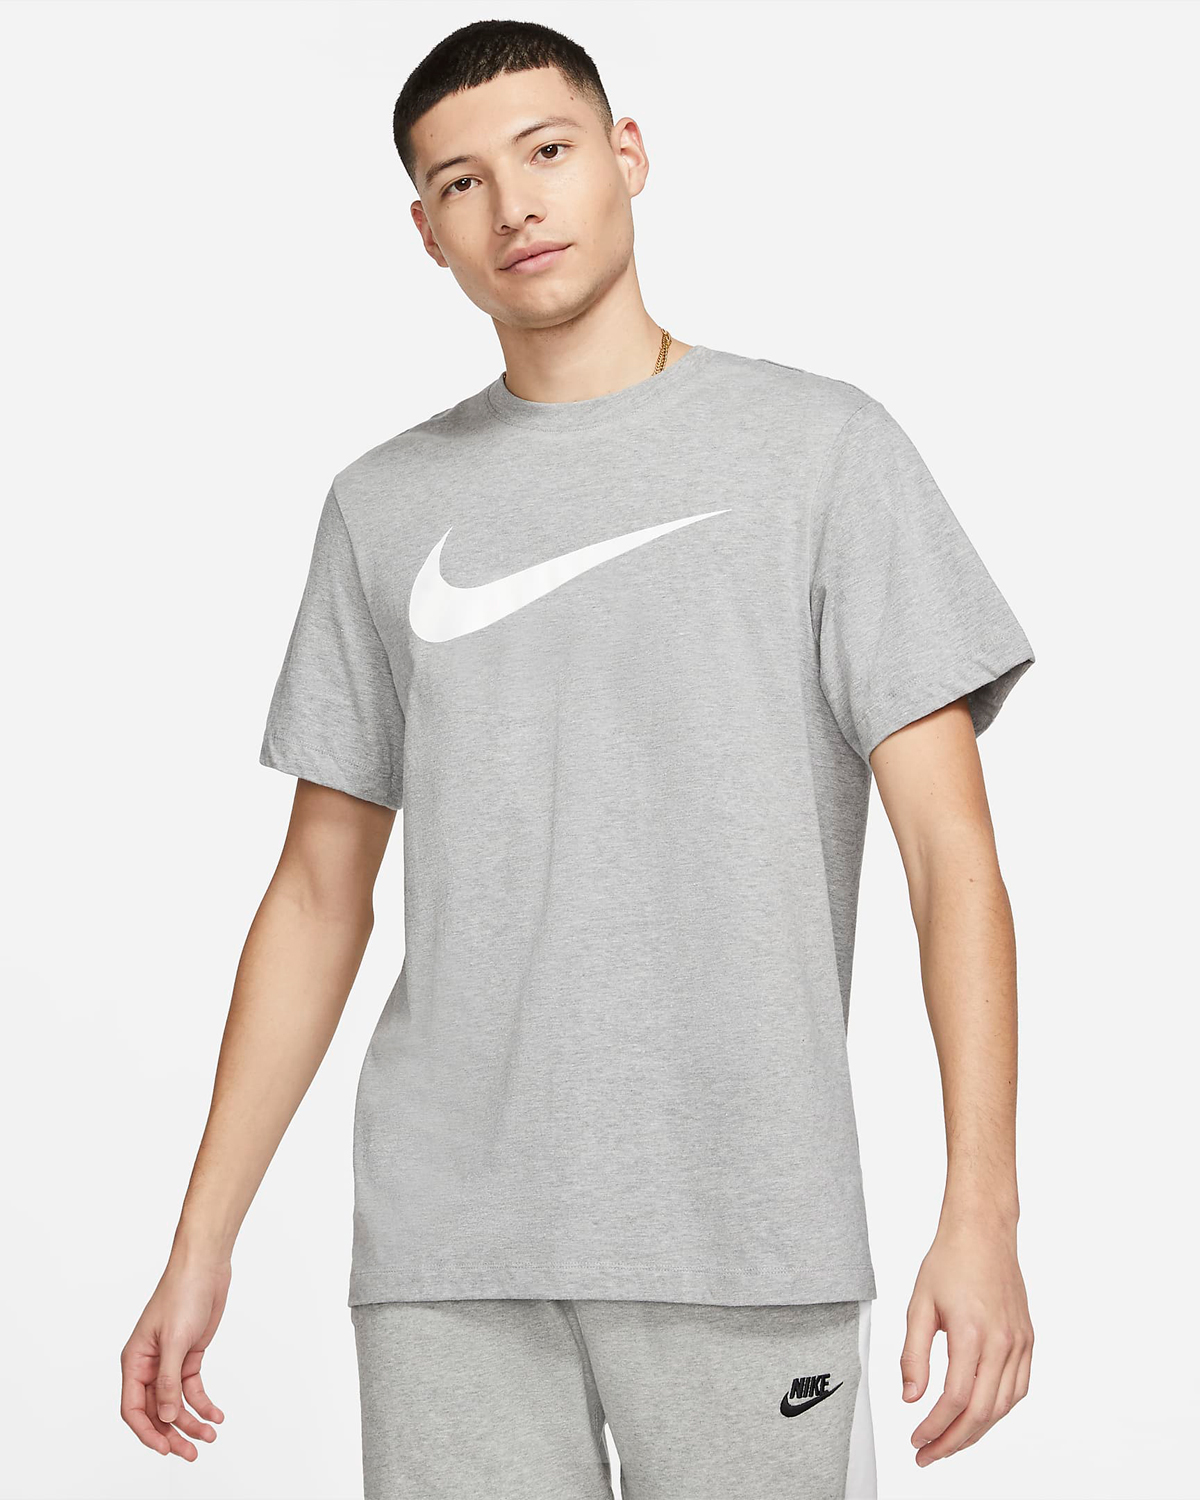 Nike-Sportswear-Swoosh-T-Shirt-Dark-Grey-Heather